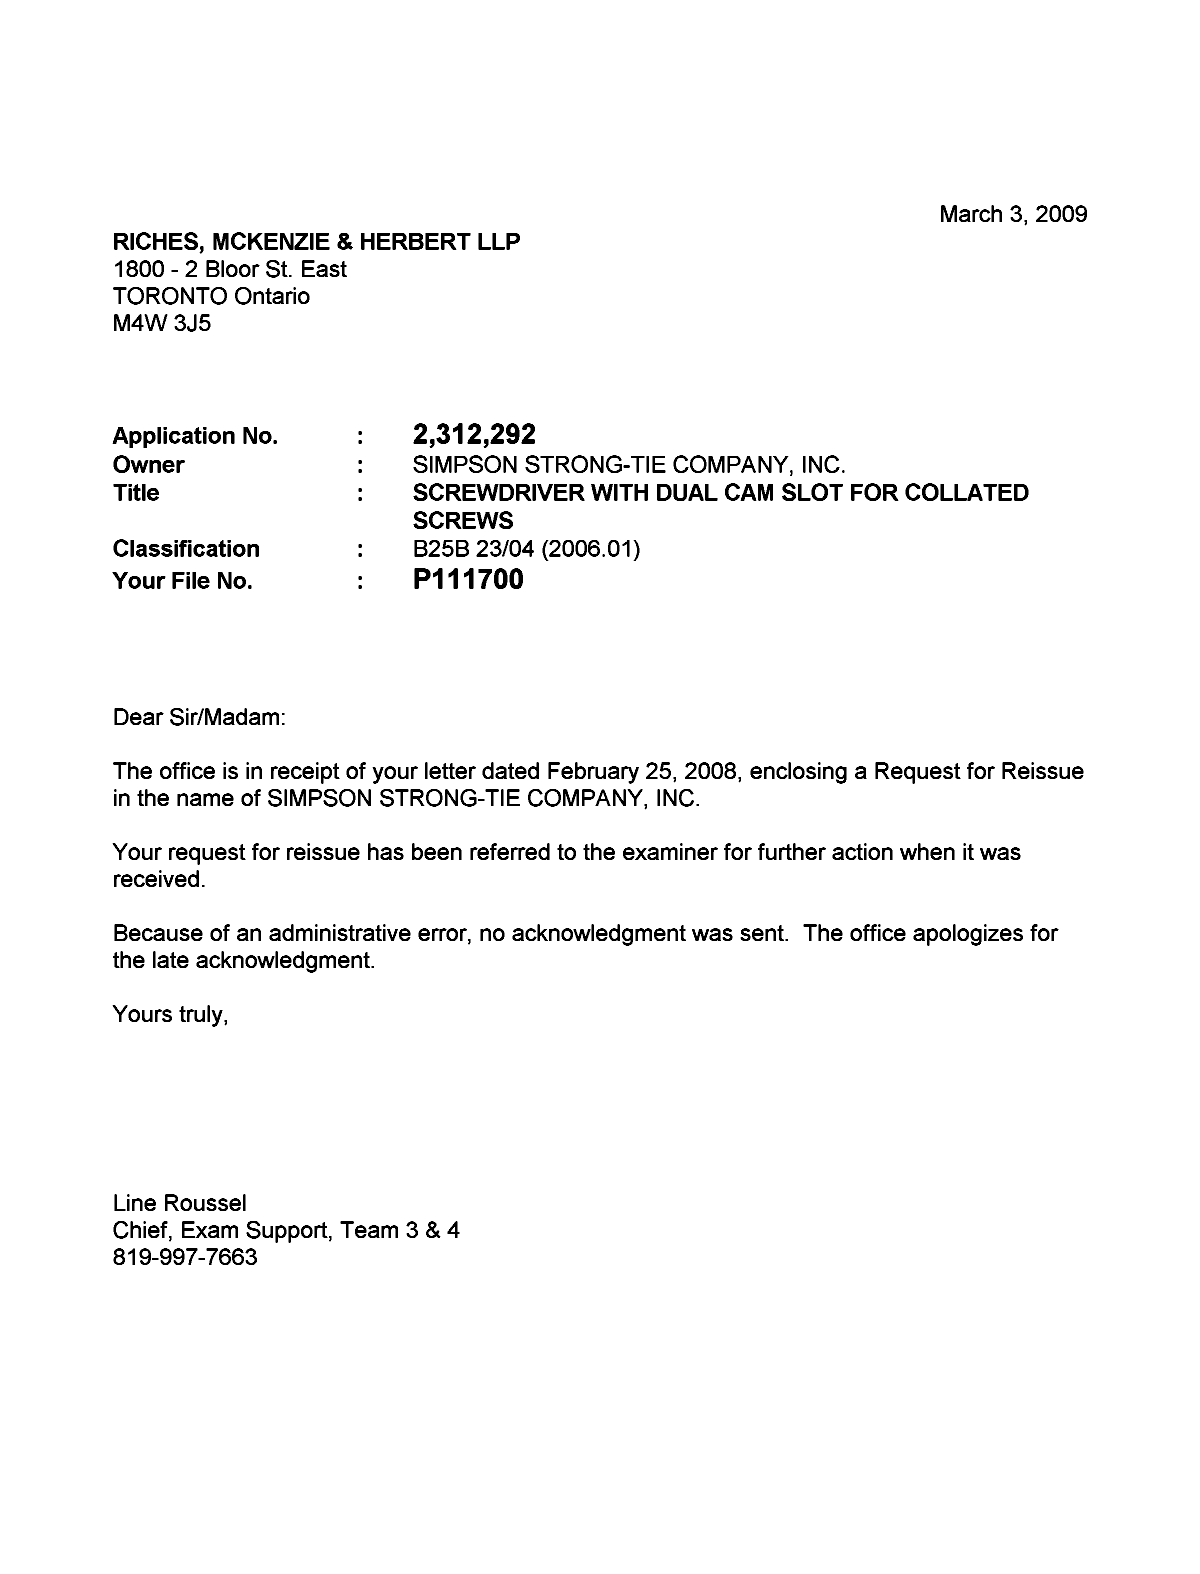 Canadian Patent Document 2312292. Correspondence 20081203. Image 1 of 1